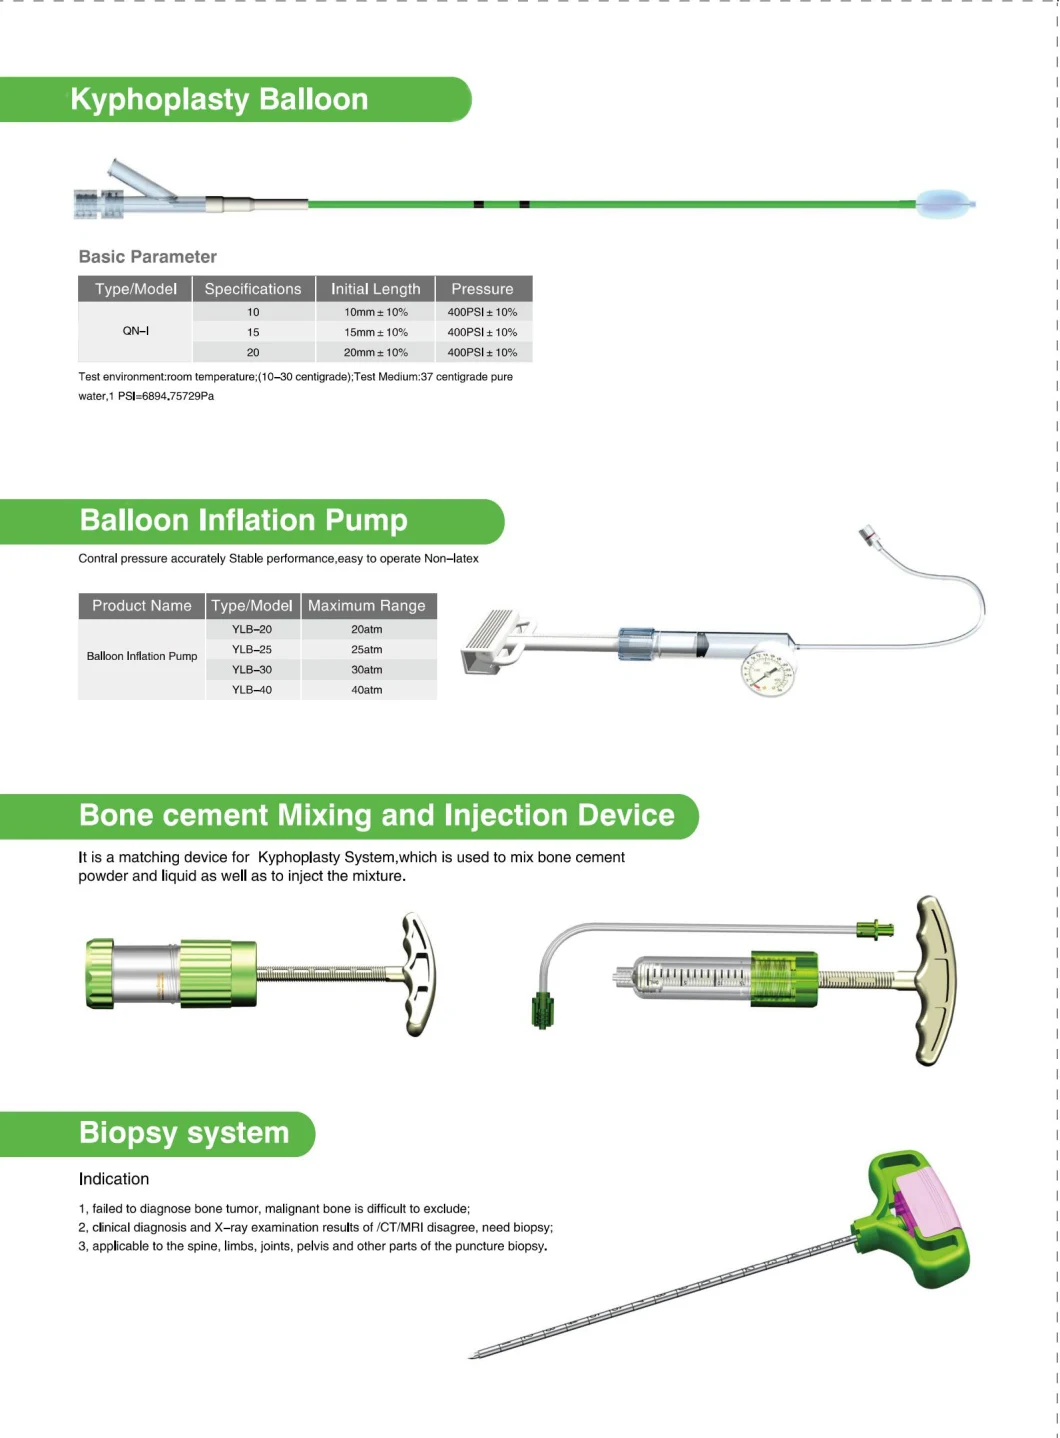 Kyphoplasty Vertebroplasty Orthopedic Surgical Bone Cement Syringe Injector Spinal Bone Biopsy Needle Punch Balloon Inflation Pump Catheter Pkp Pvp Instrument